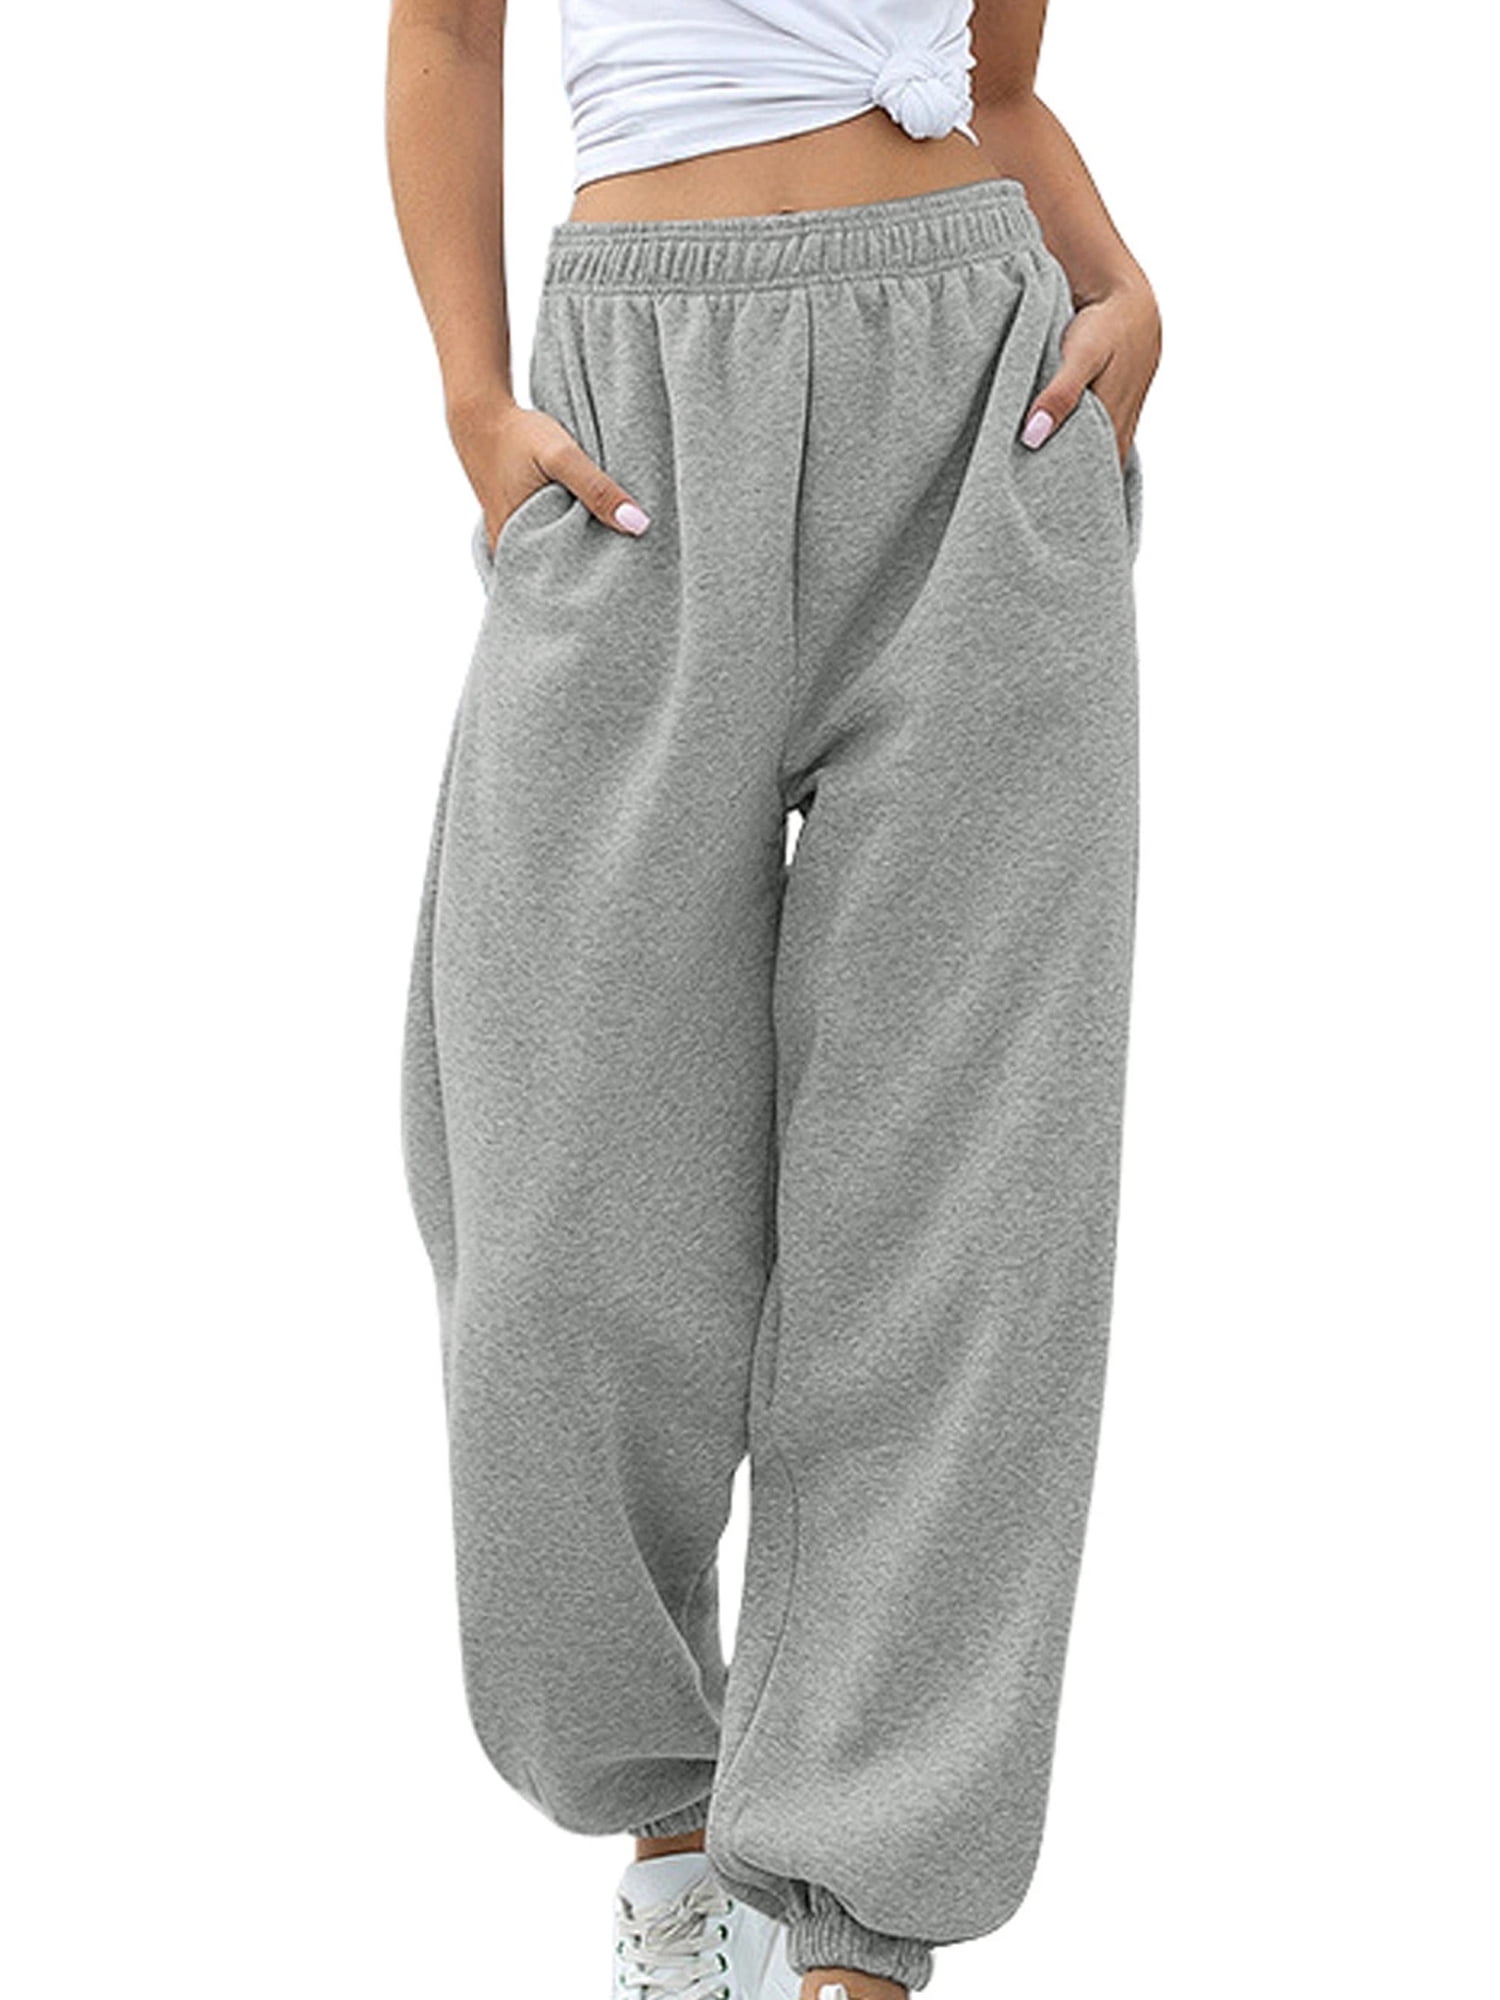 Women Yoga Plain Pants Sweatpants Jogging Bottoms Sports Casual Workout Trousers 